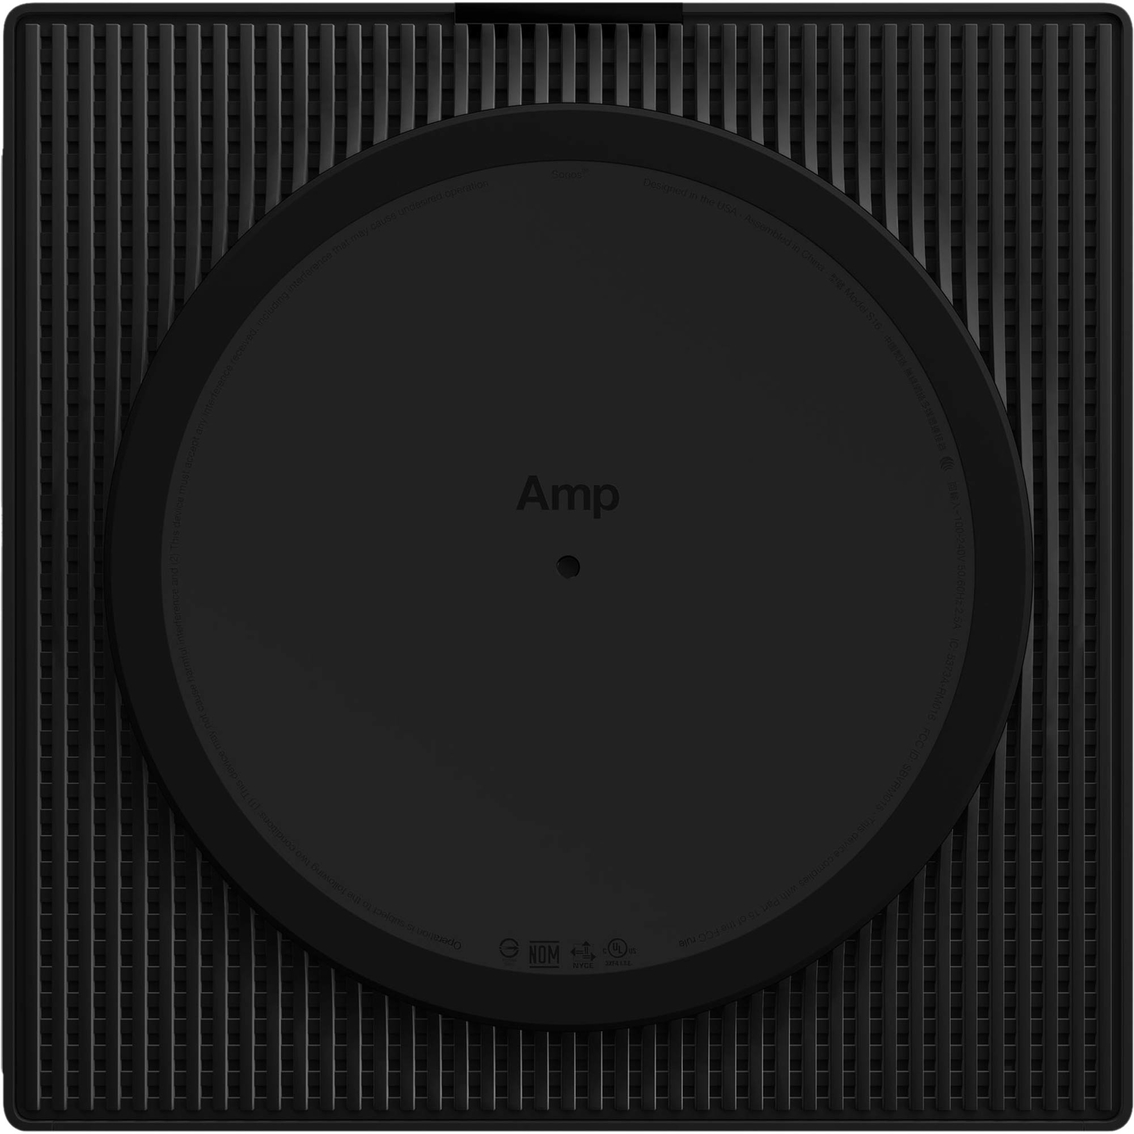 Sonos Amp - Image 5 of 6